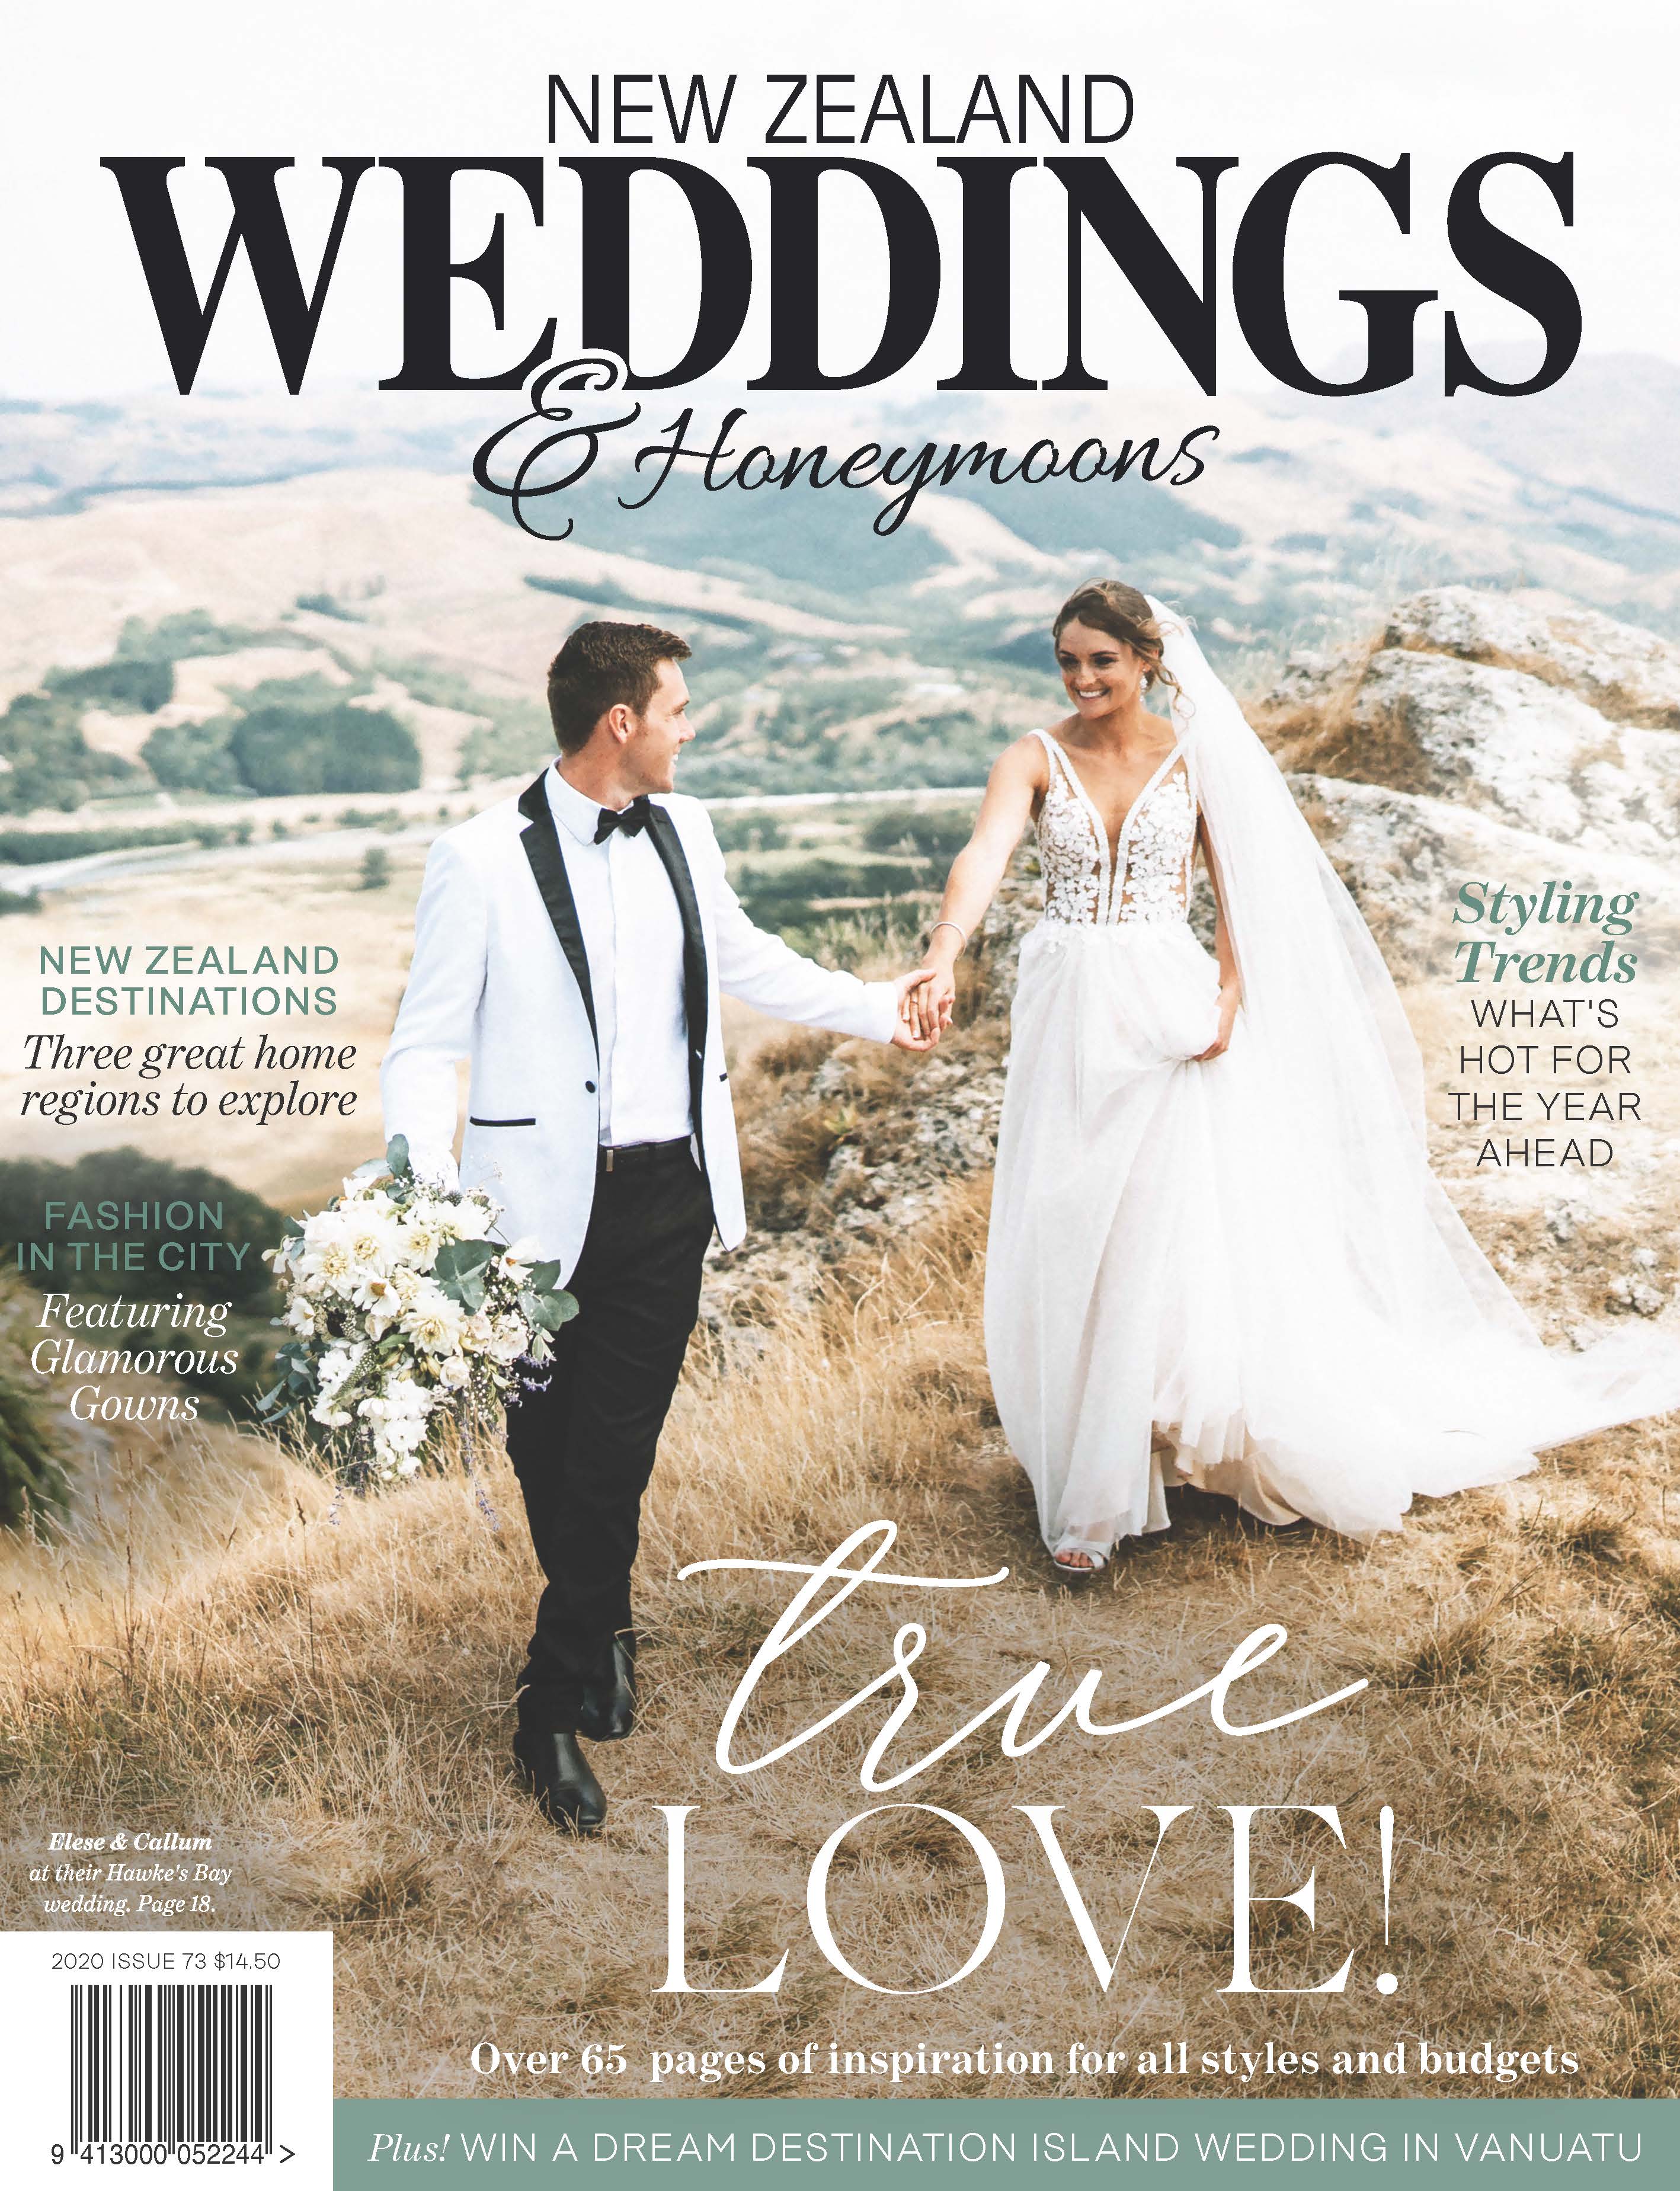 NZ Weddings & Honeymoons cover